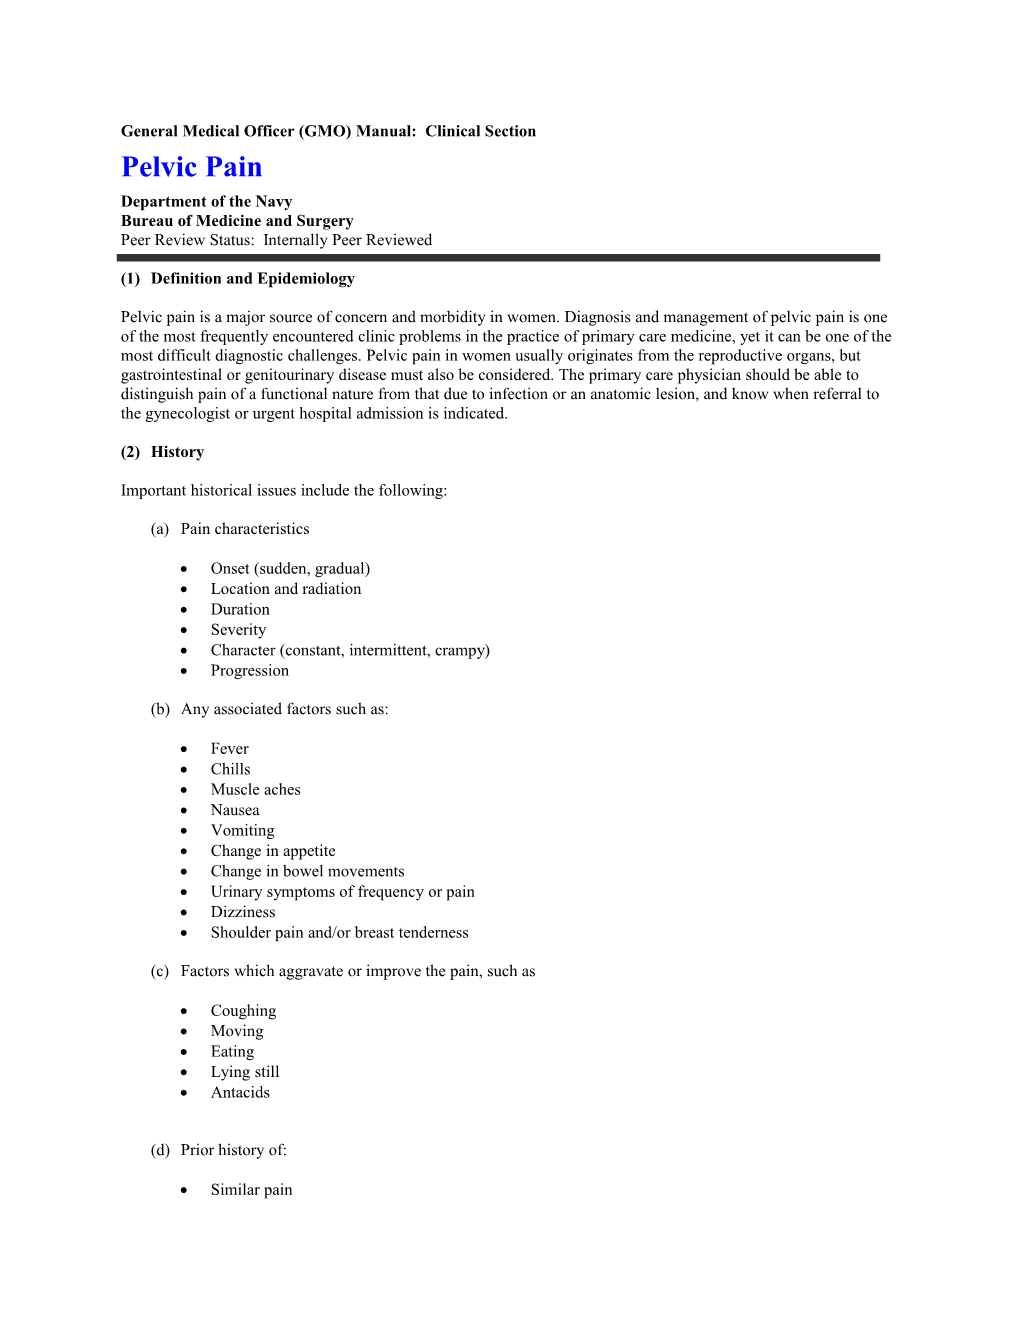 General Medical Officer (GMO) Manual: Pelvic Pain